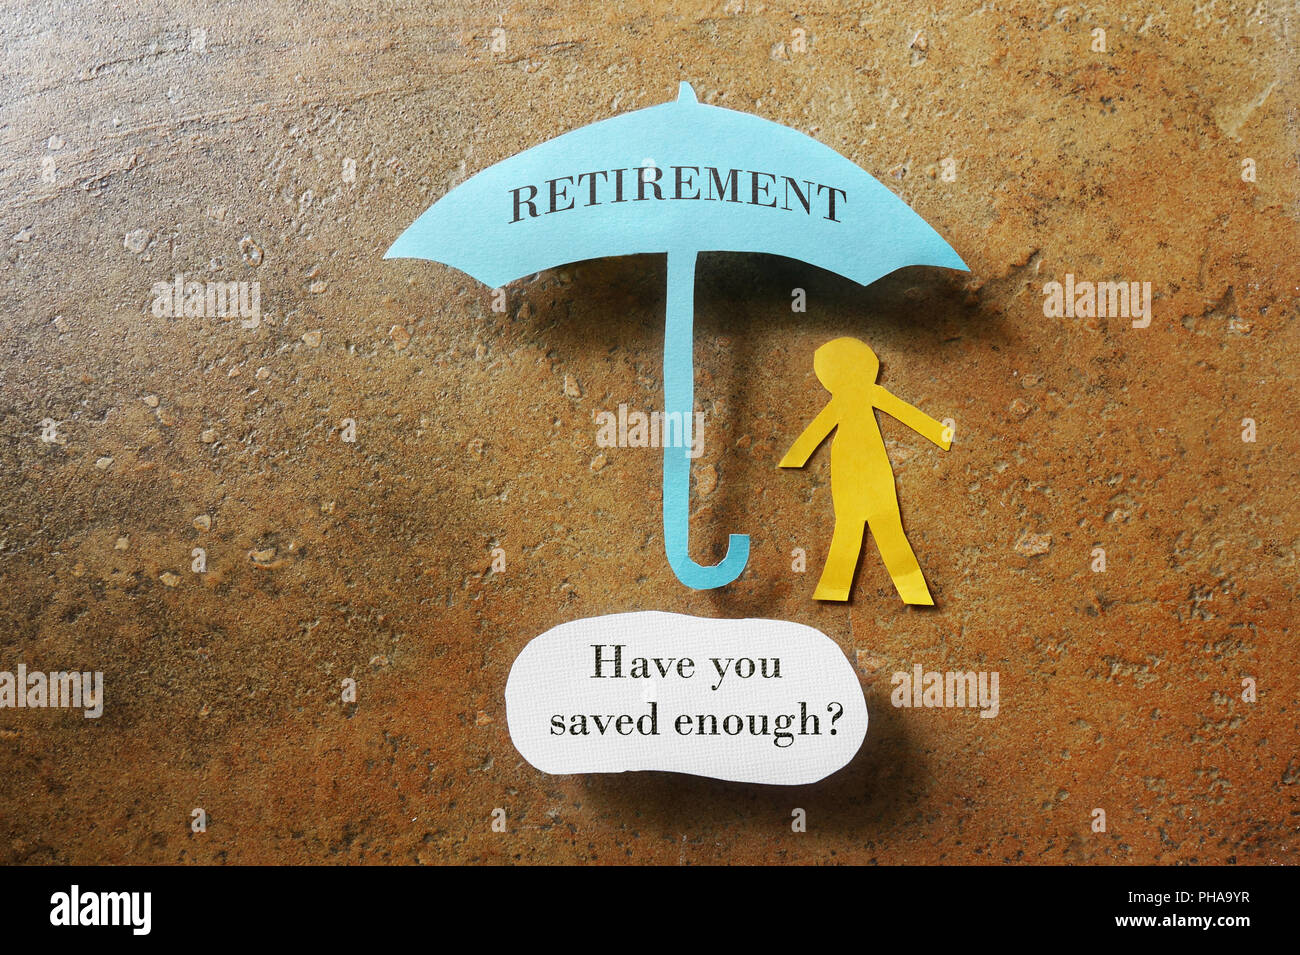 Retirement savings Stock Photo